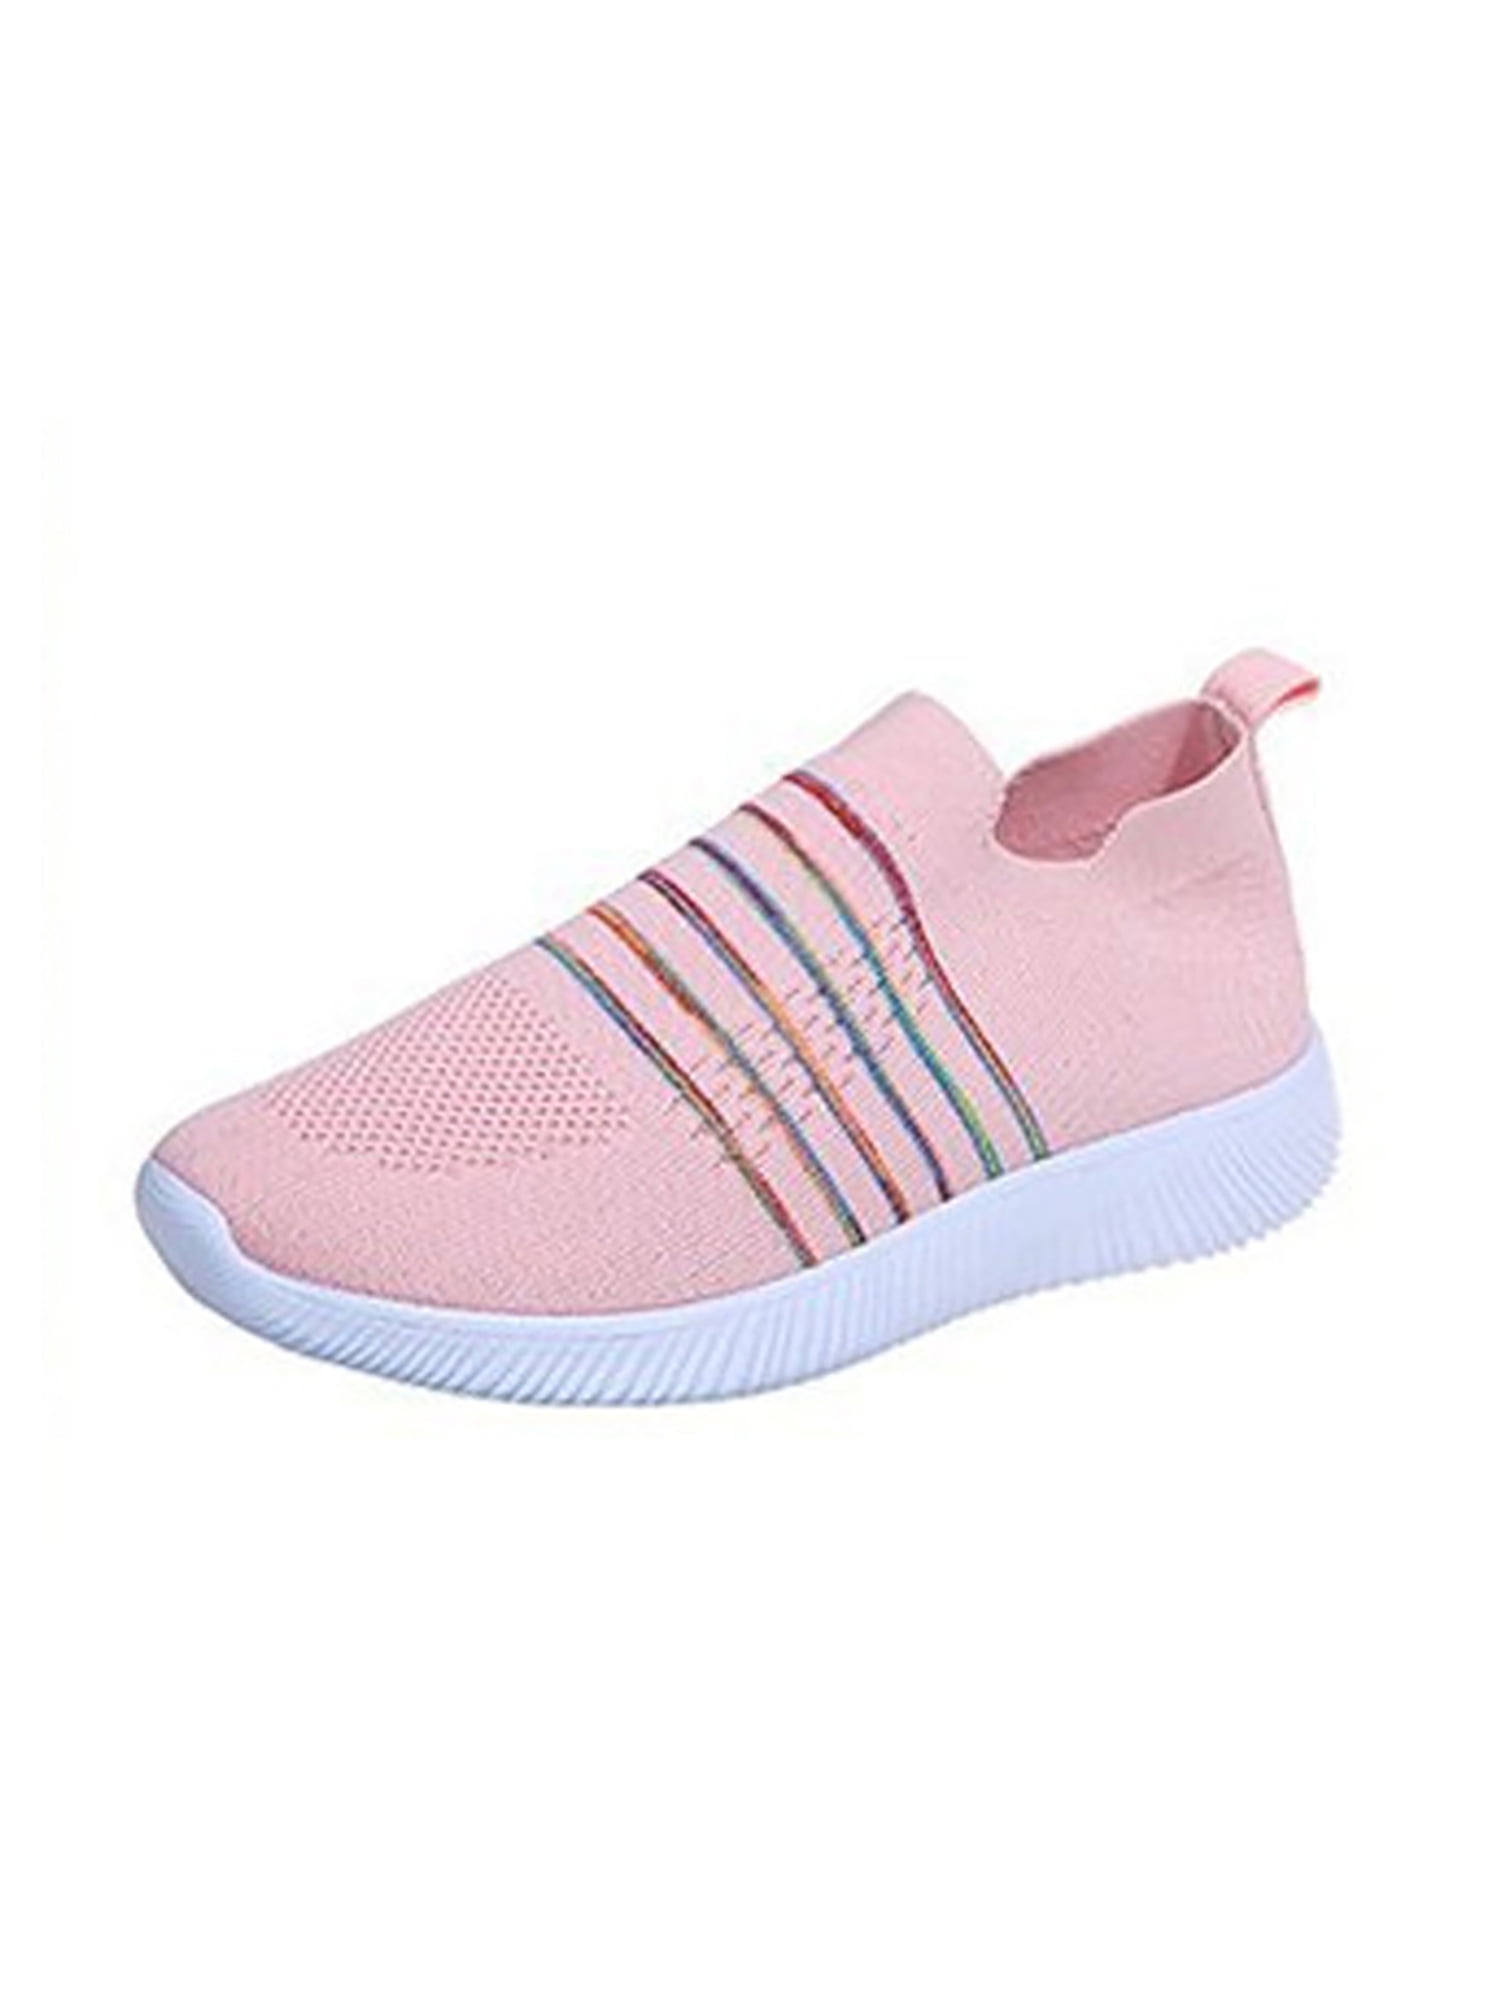 Avamo Womens Sock Trainers Ladies Sneakers Slip On Plimsole Pumps Shoes Walmart.com